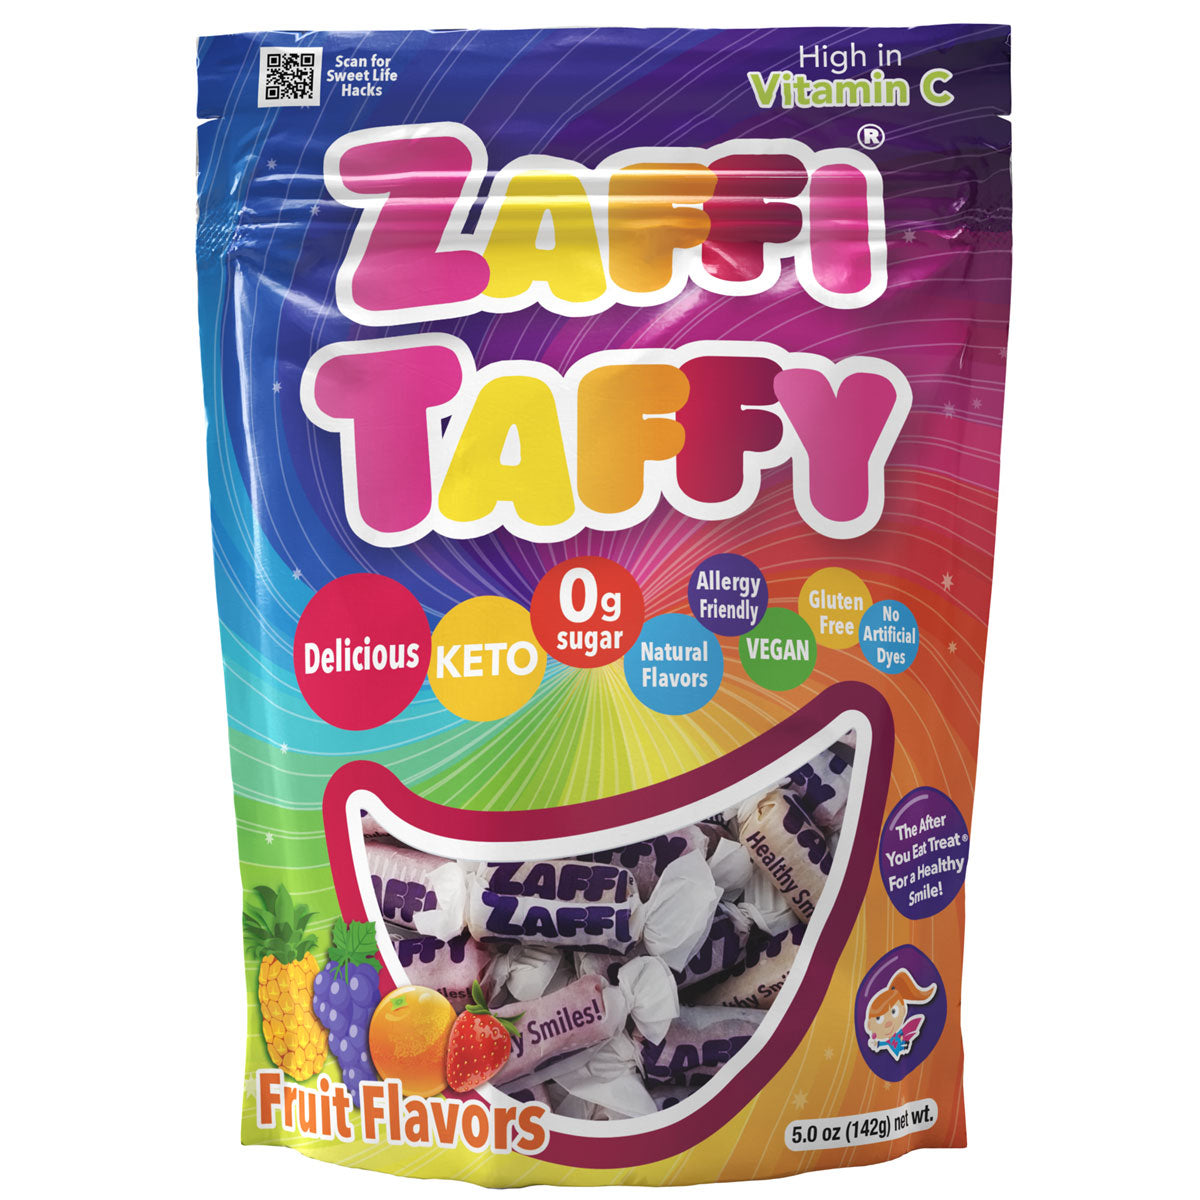 Zaffy Taffy Clean Teeth Candy in Assorted Fruit. High in Vitamin C.